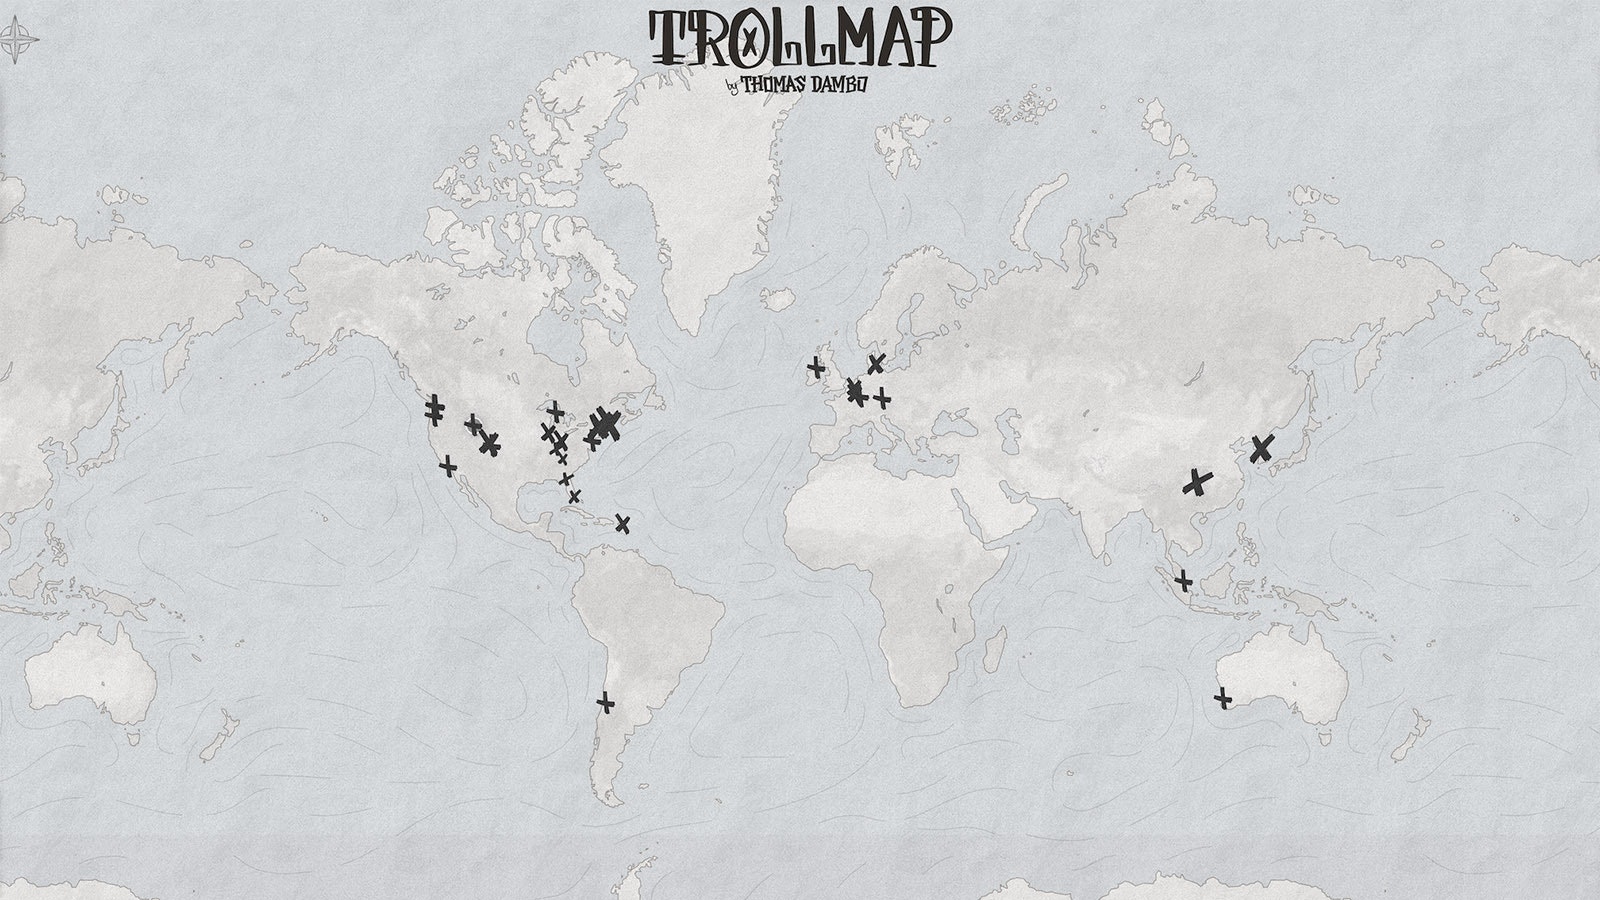 Thomas Dambo's troll map shows where his trolls are around the world.